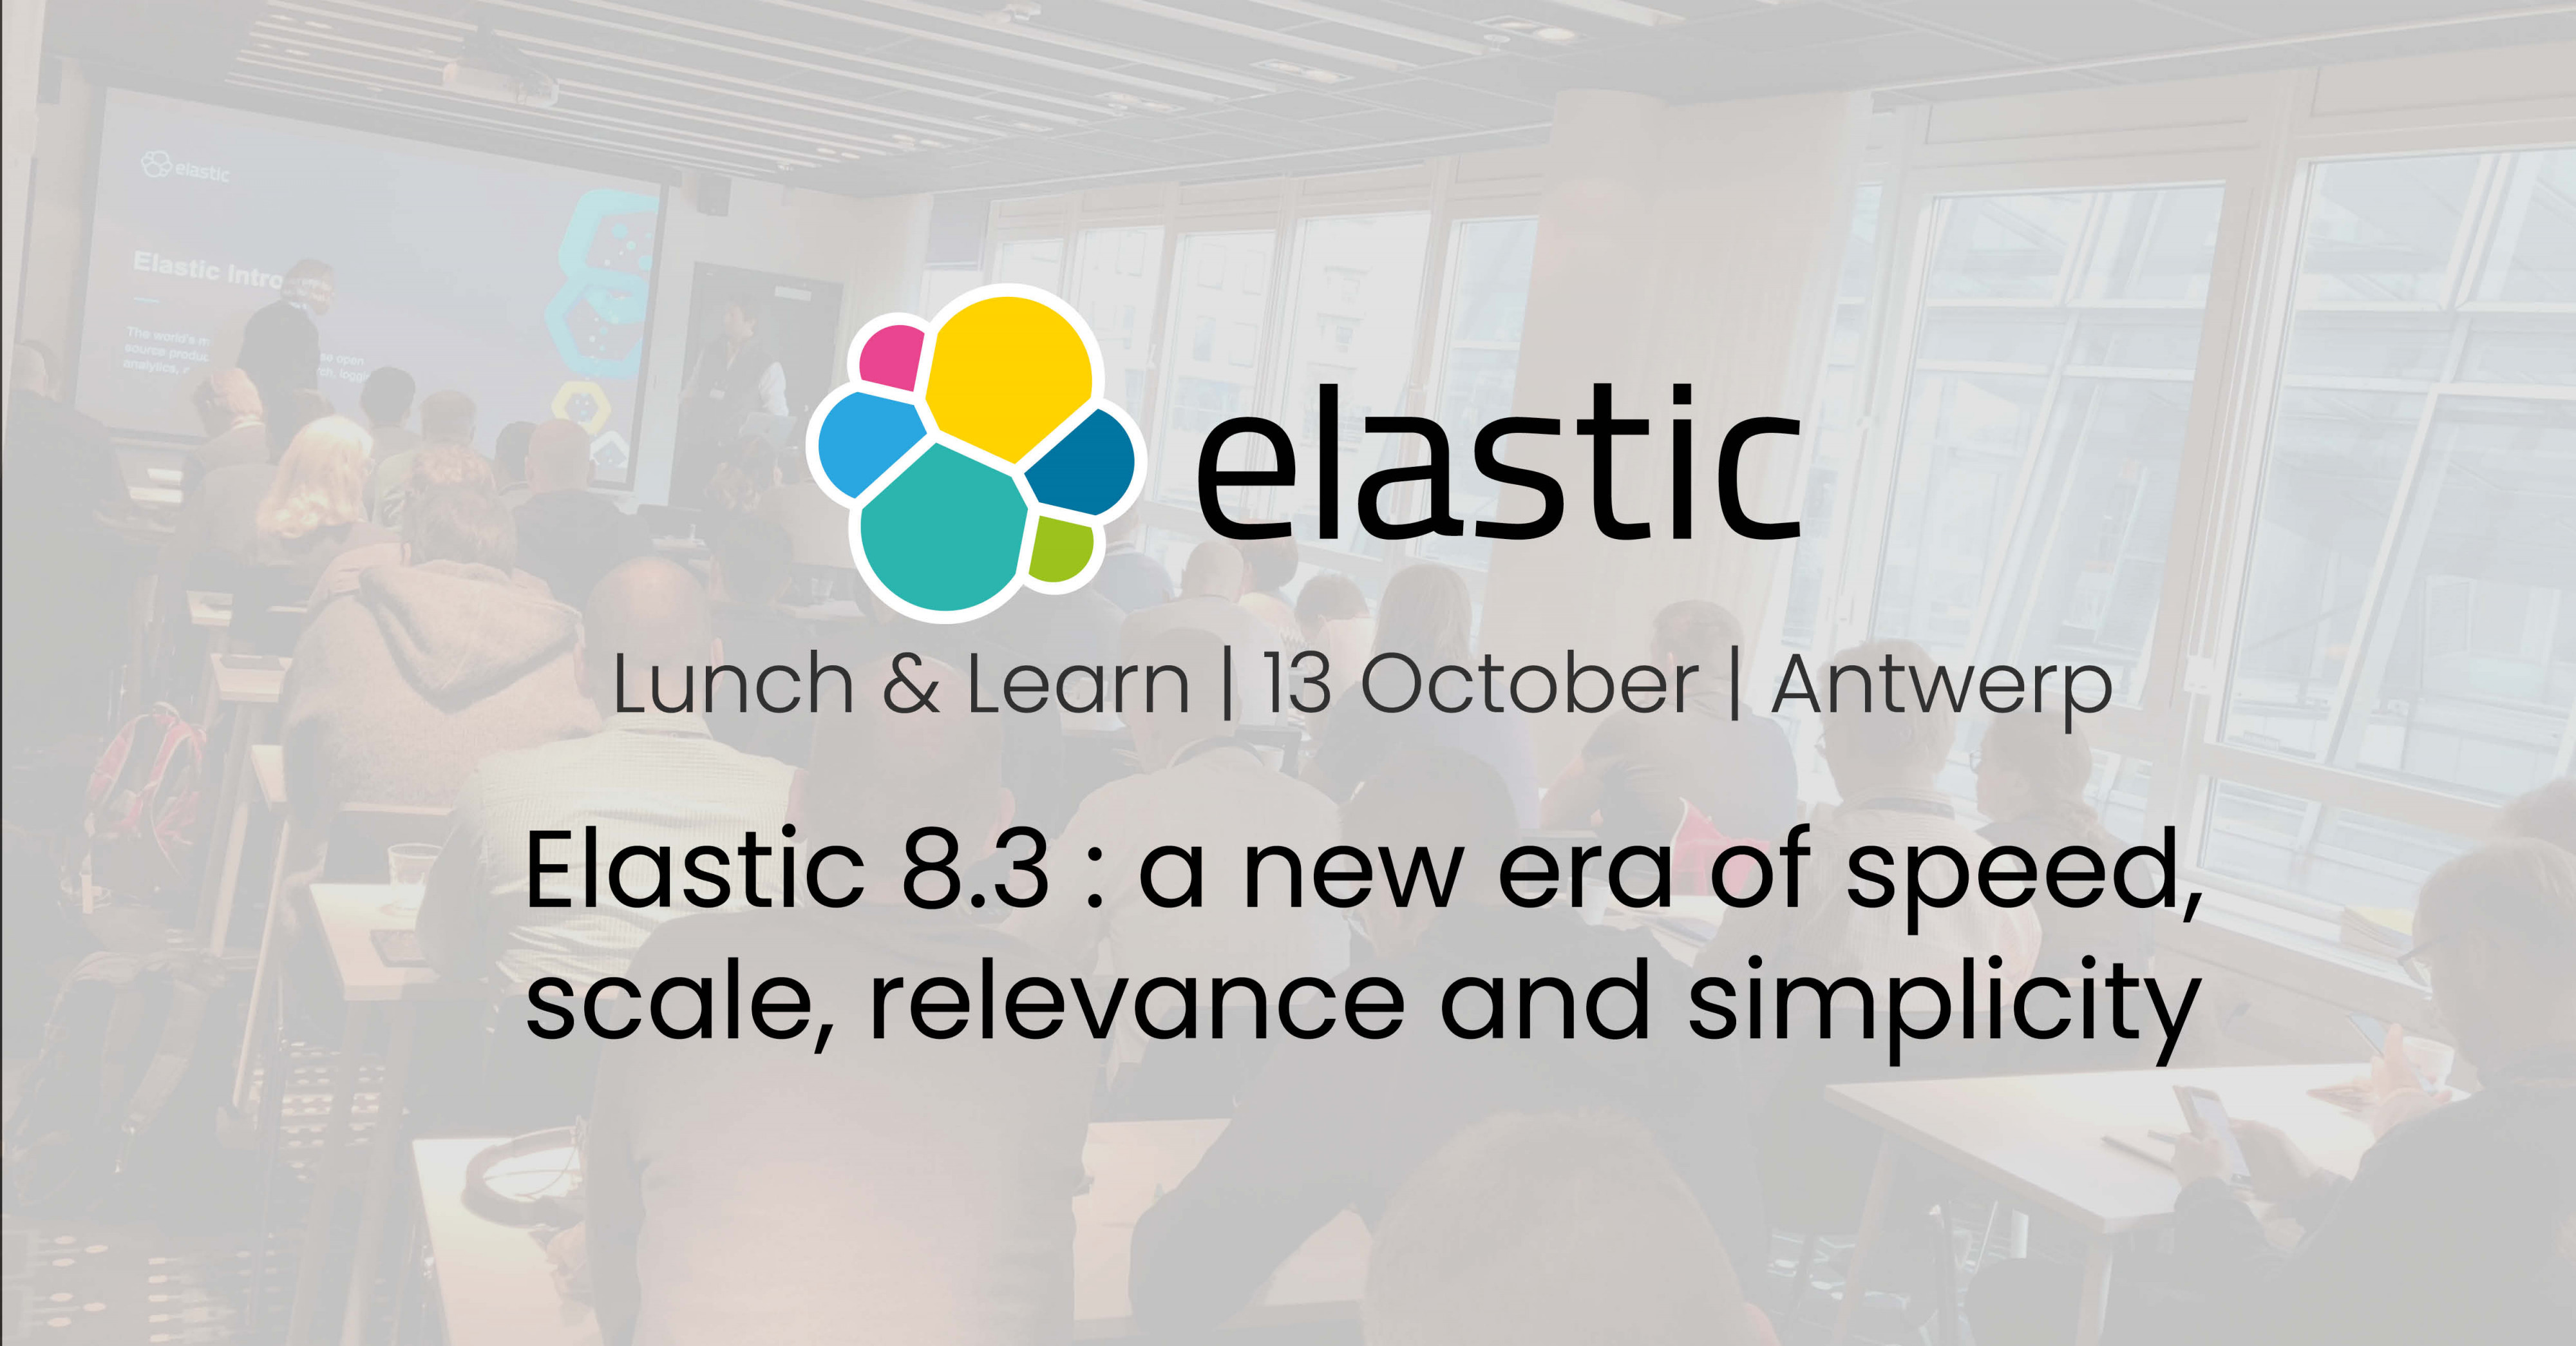 Elastic Lunch & Learn